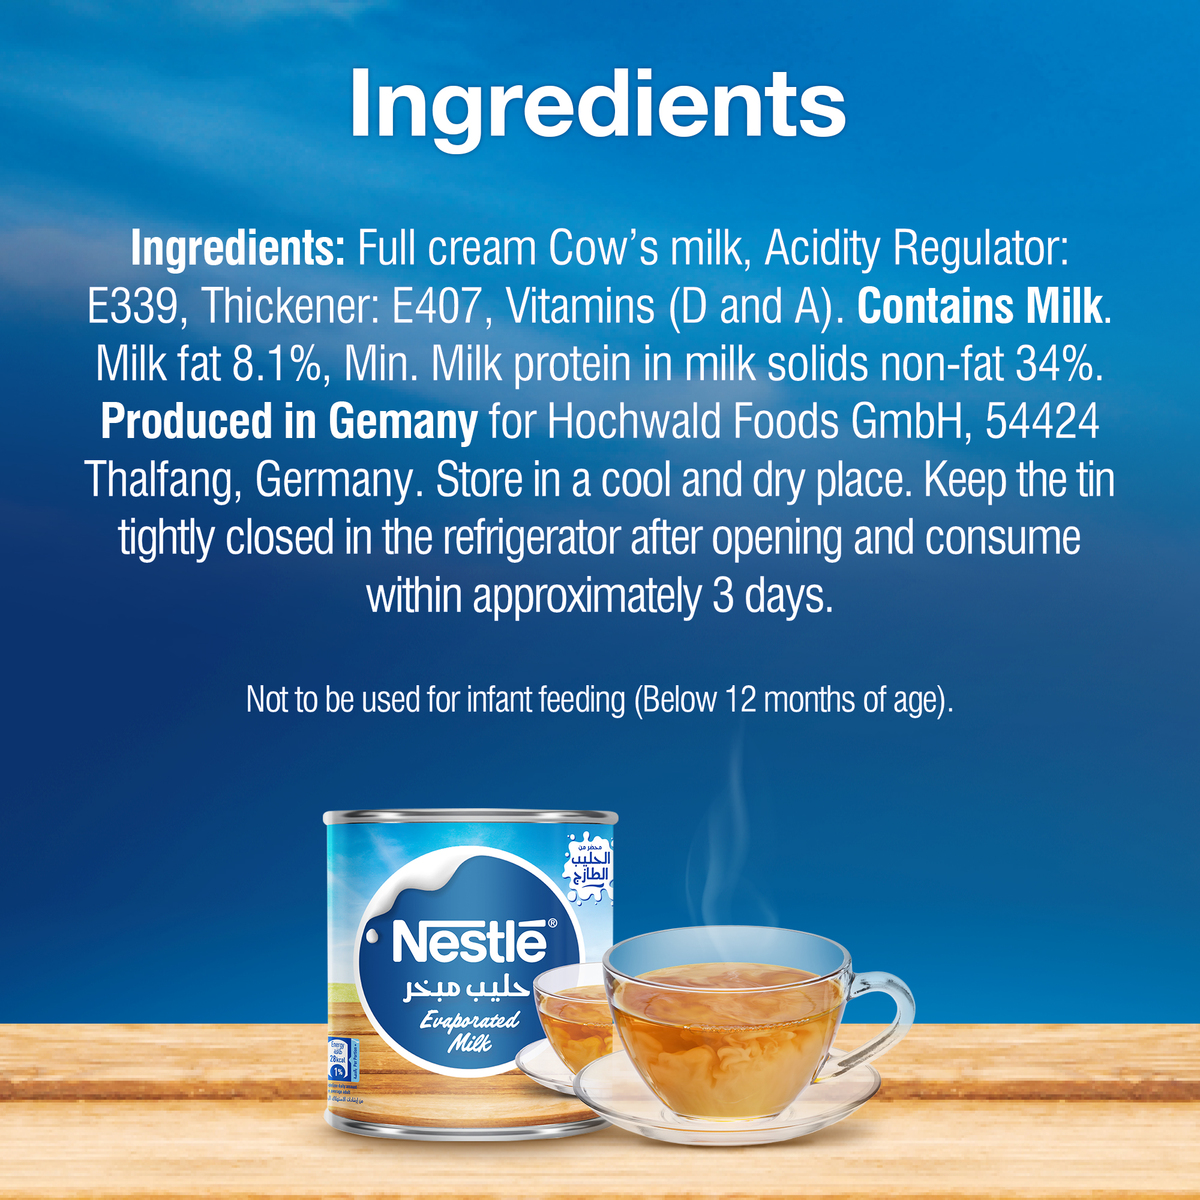 Nestle Evaporated Milk 170 g